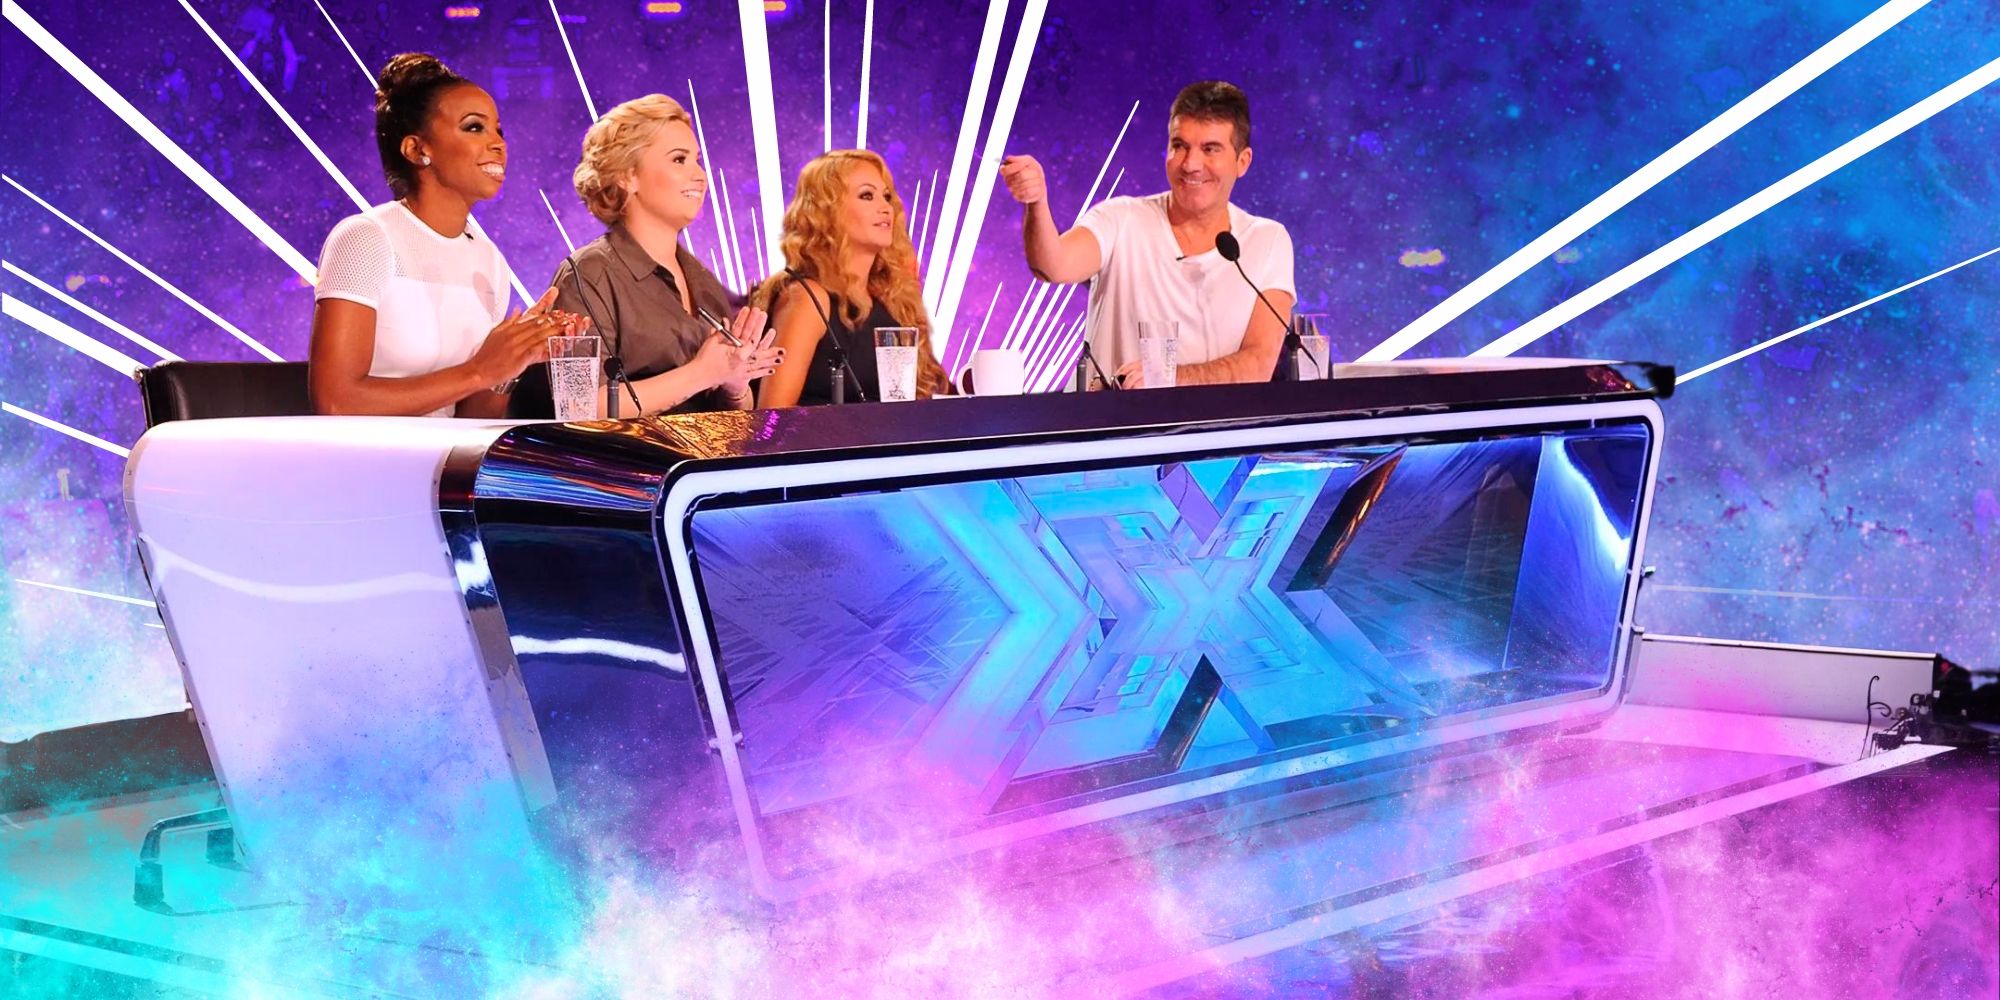 The X-Factor judges